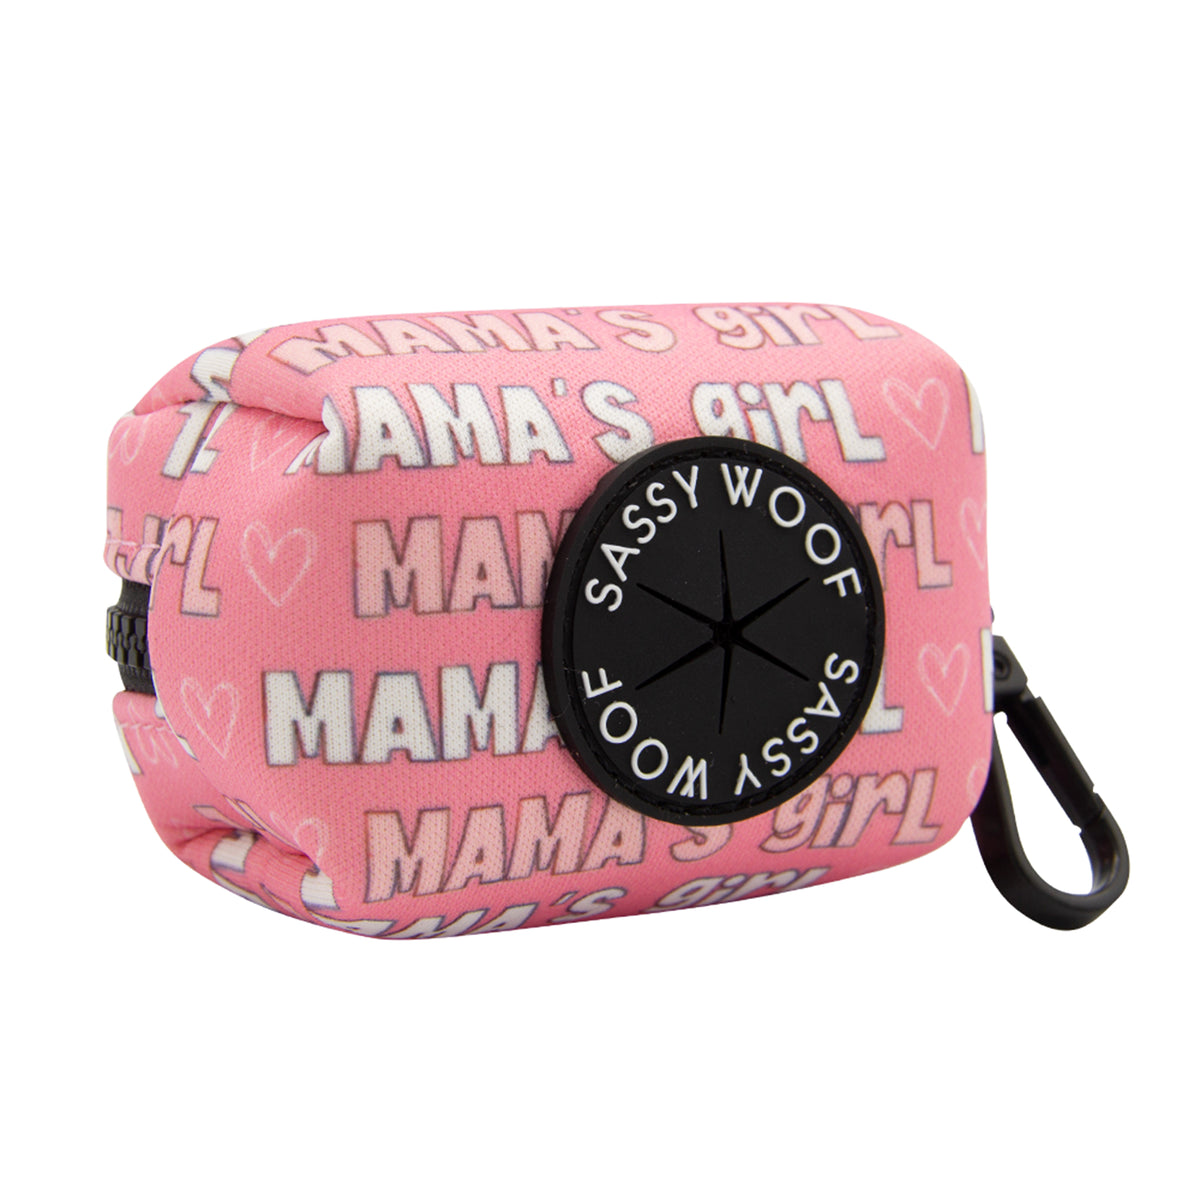 Dog Waste Bag Holder - Mama's Girl